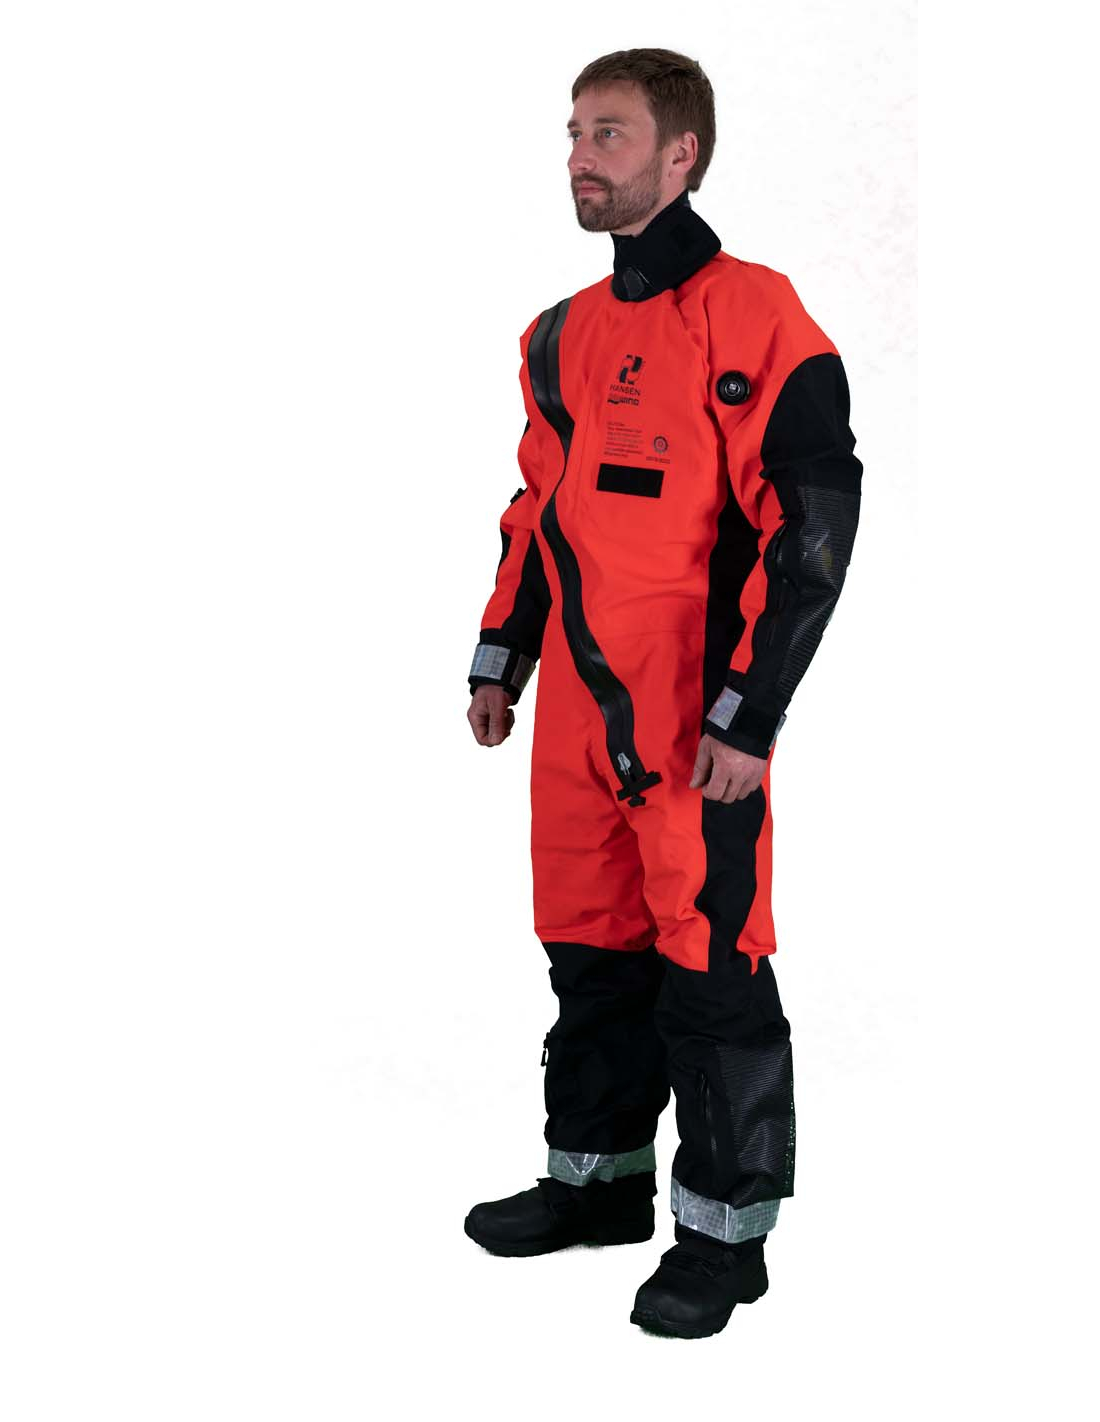 SeaWind III - ETSO, ISO & Solas work suit / survival suit / immersion suit